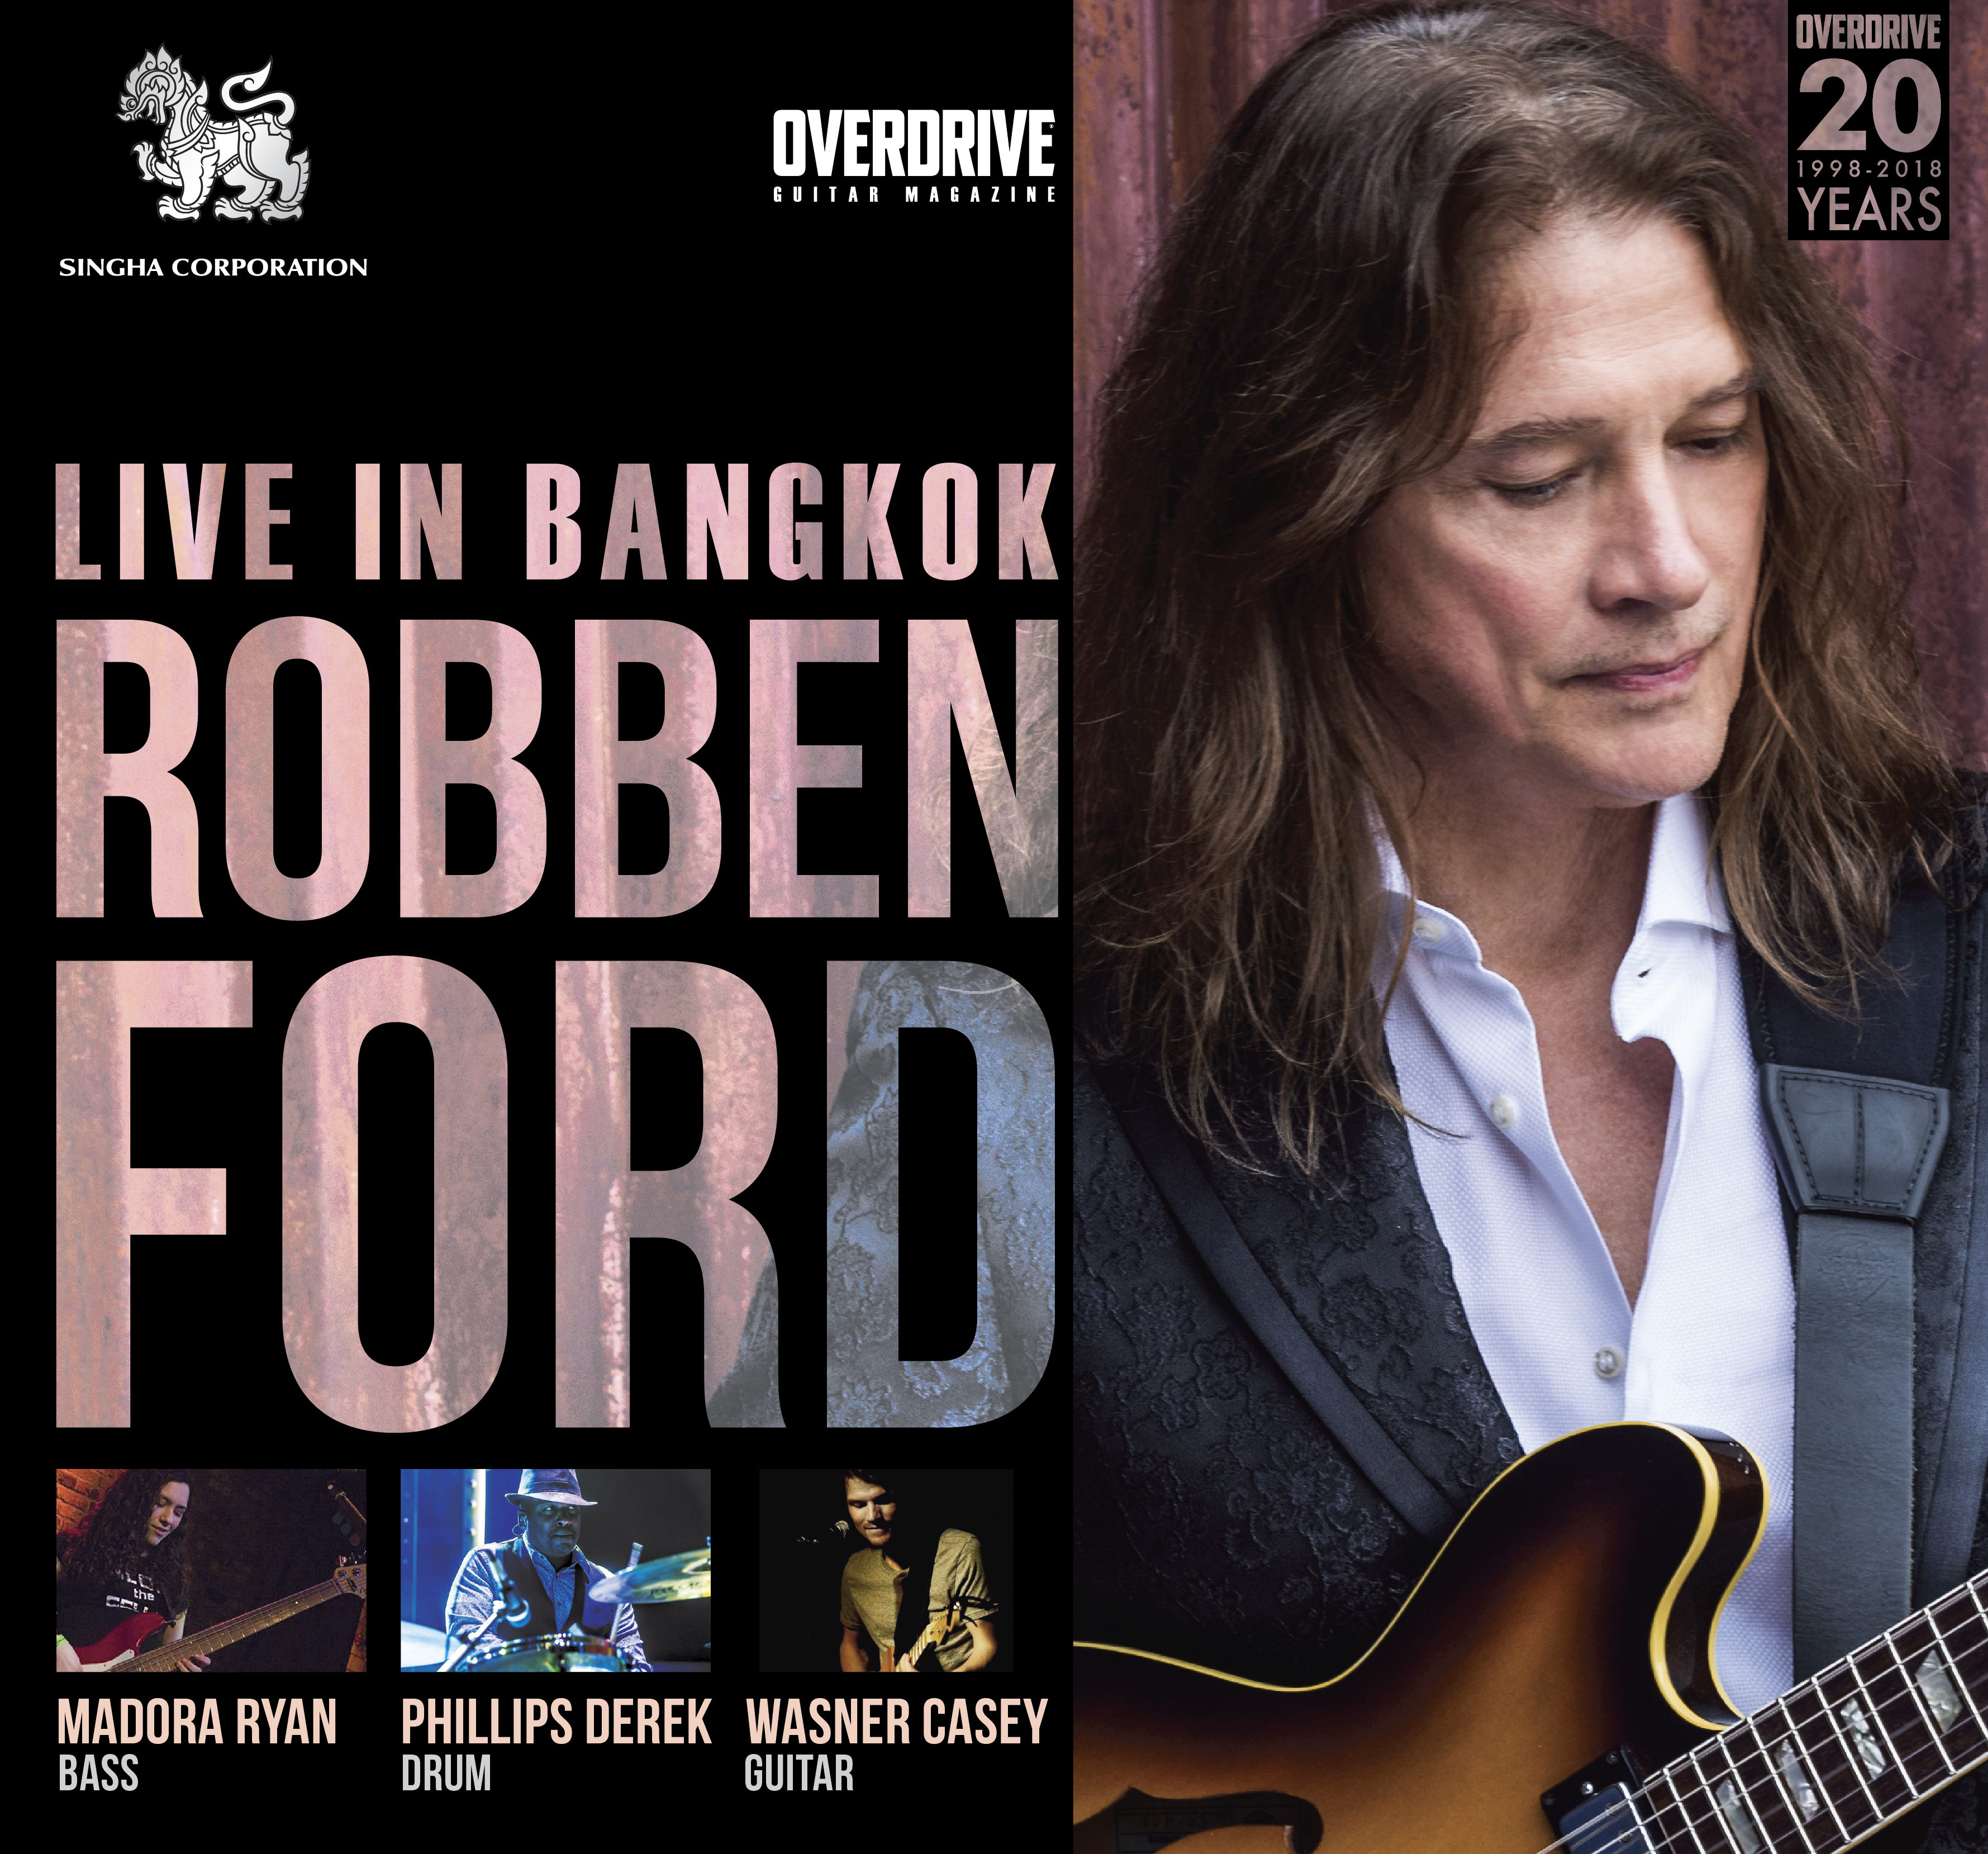 Robben Ford Live in Bangkok มือกีตาร์บลูส์และแจ๊ซระดับโลกที่คุณไม่ควรพลาด – 21 Nov 2017 @โรงละครหิมพานต์อวตาร ชั้น 4 ศูนย์การค้า Show DC